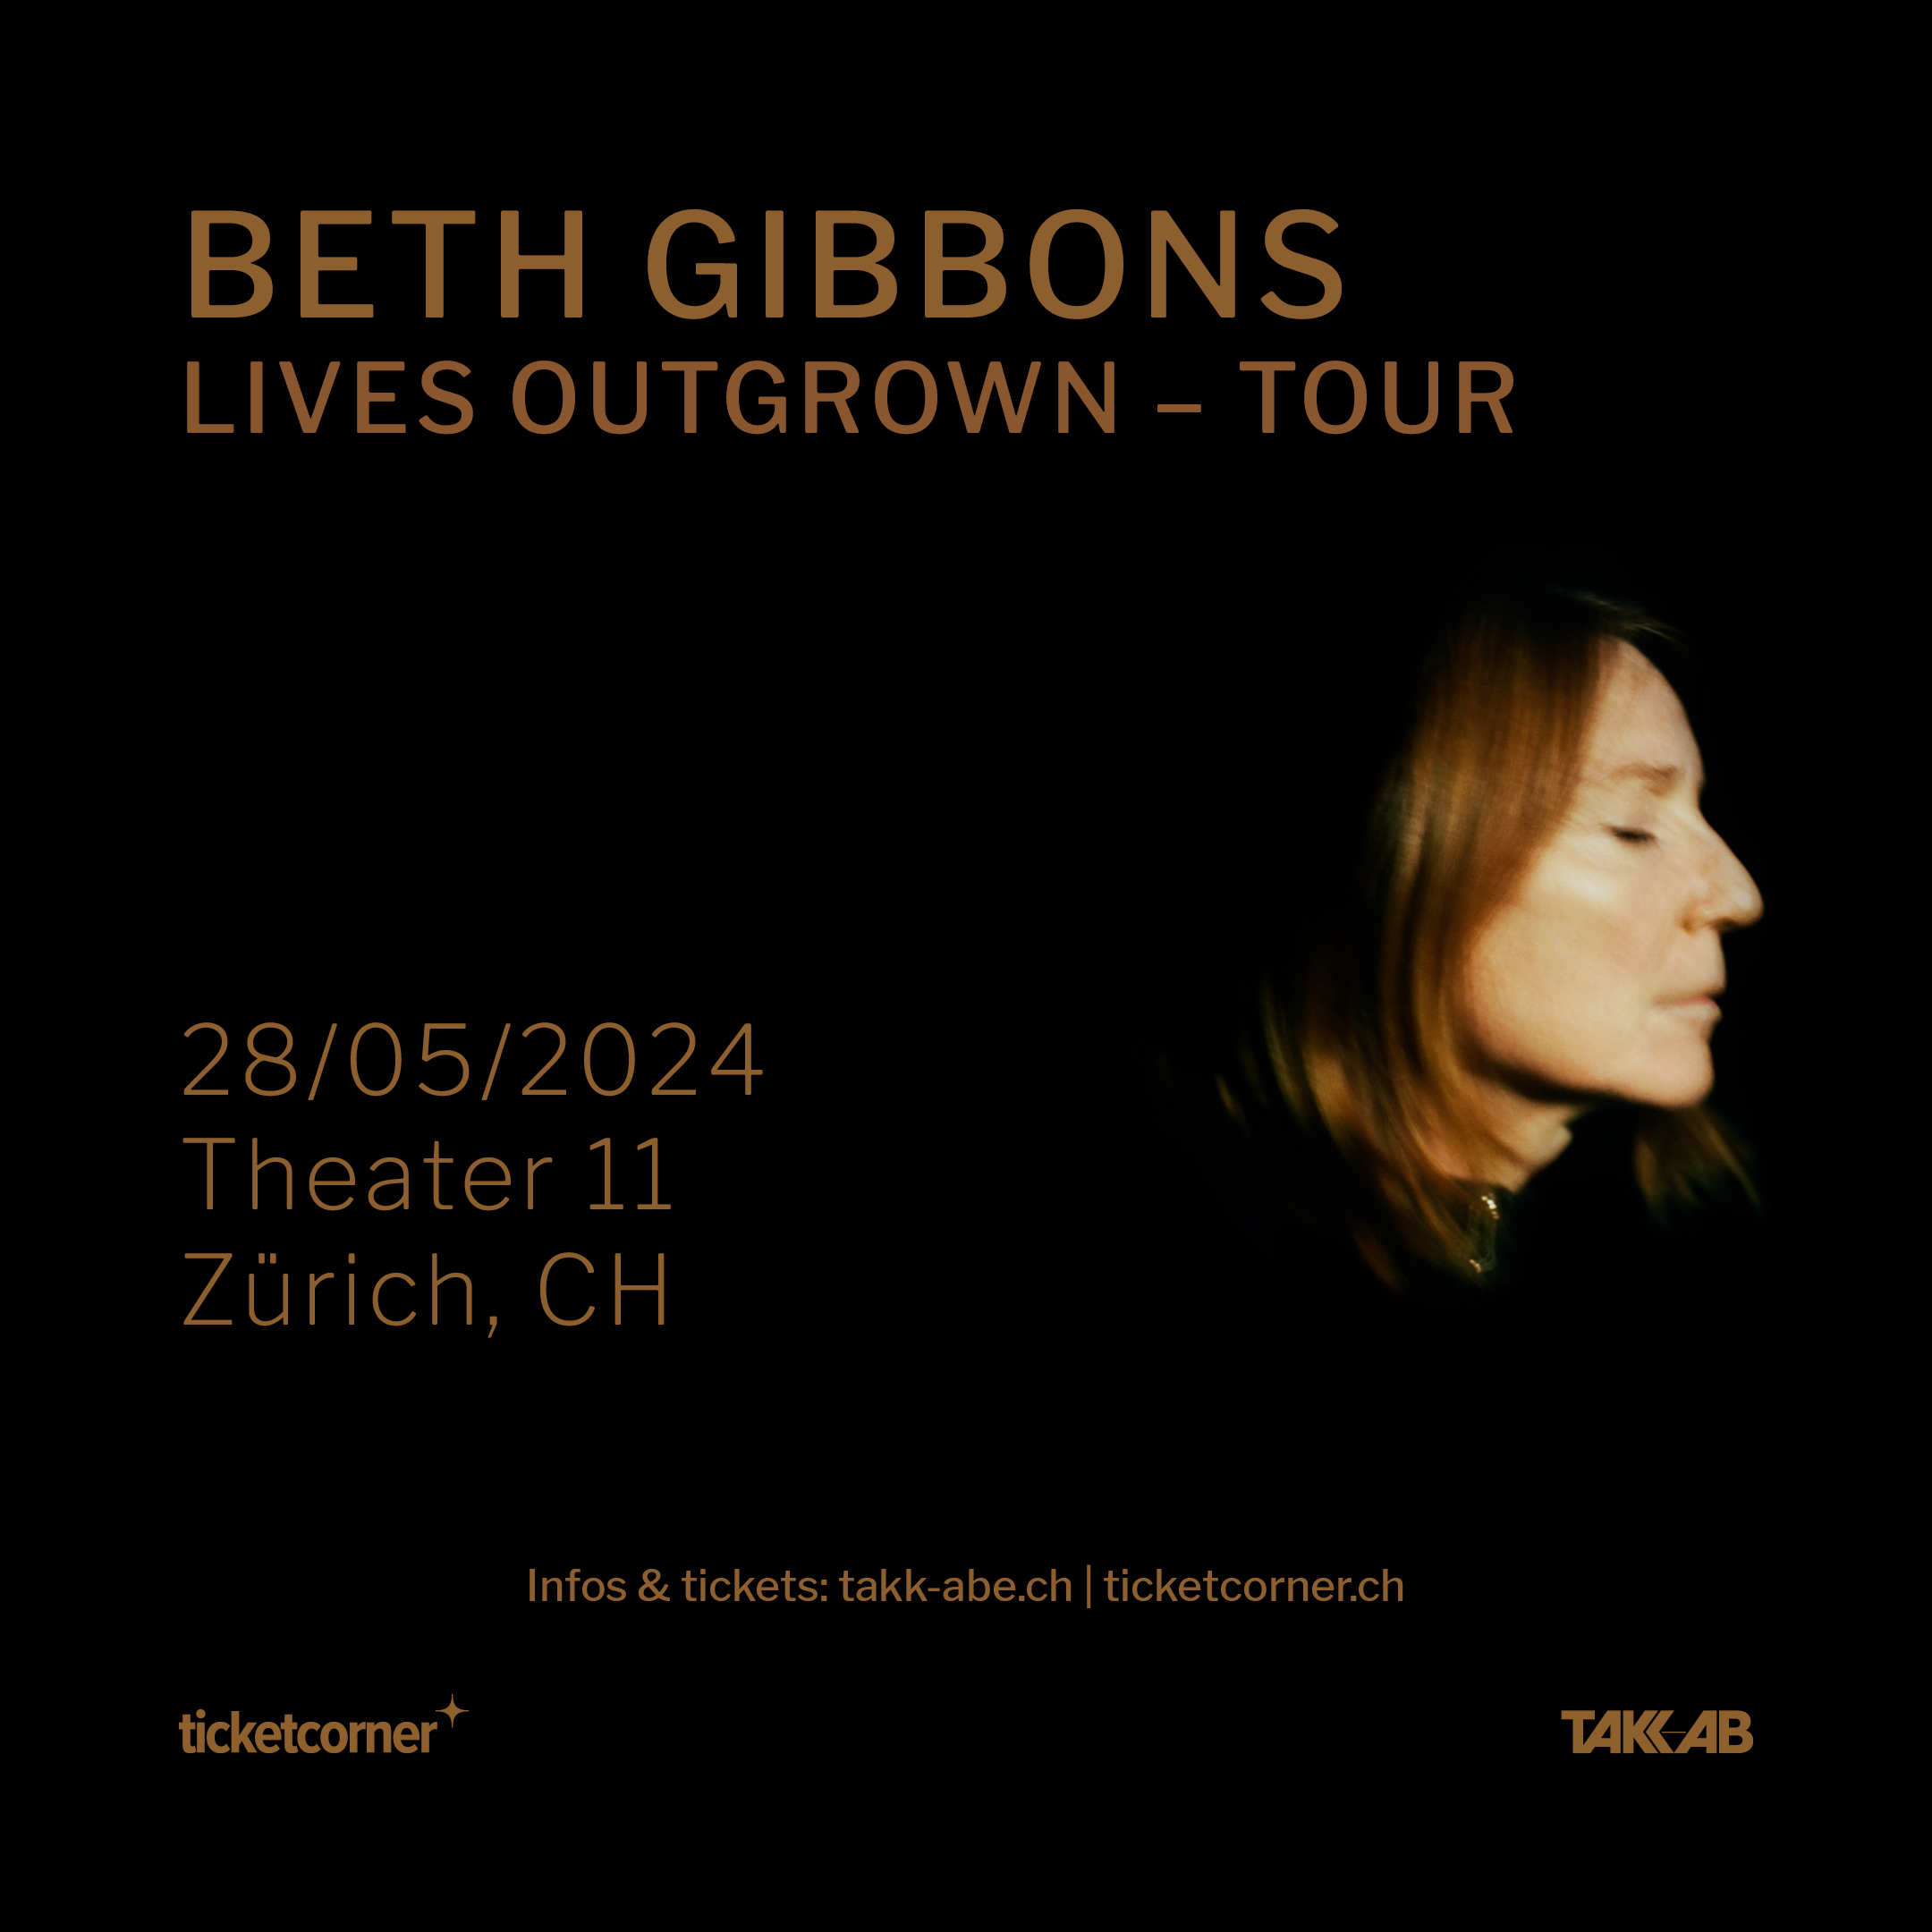 Beth Gibbons